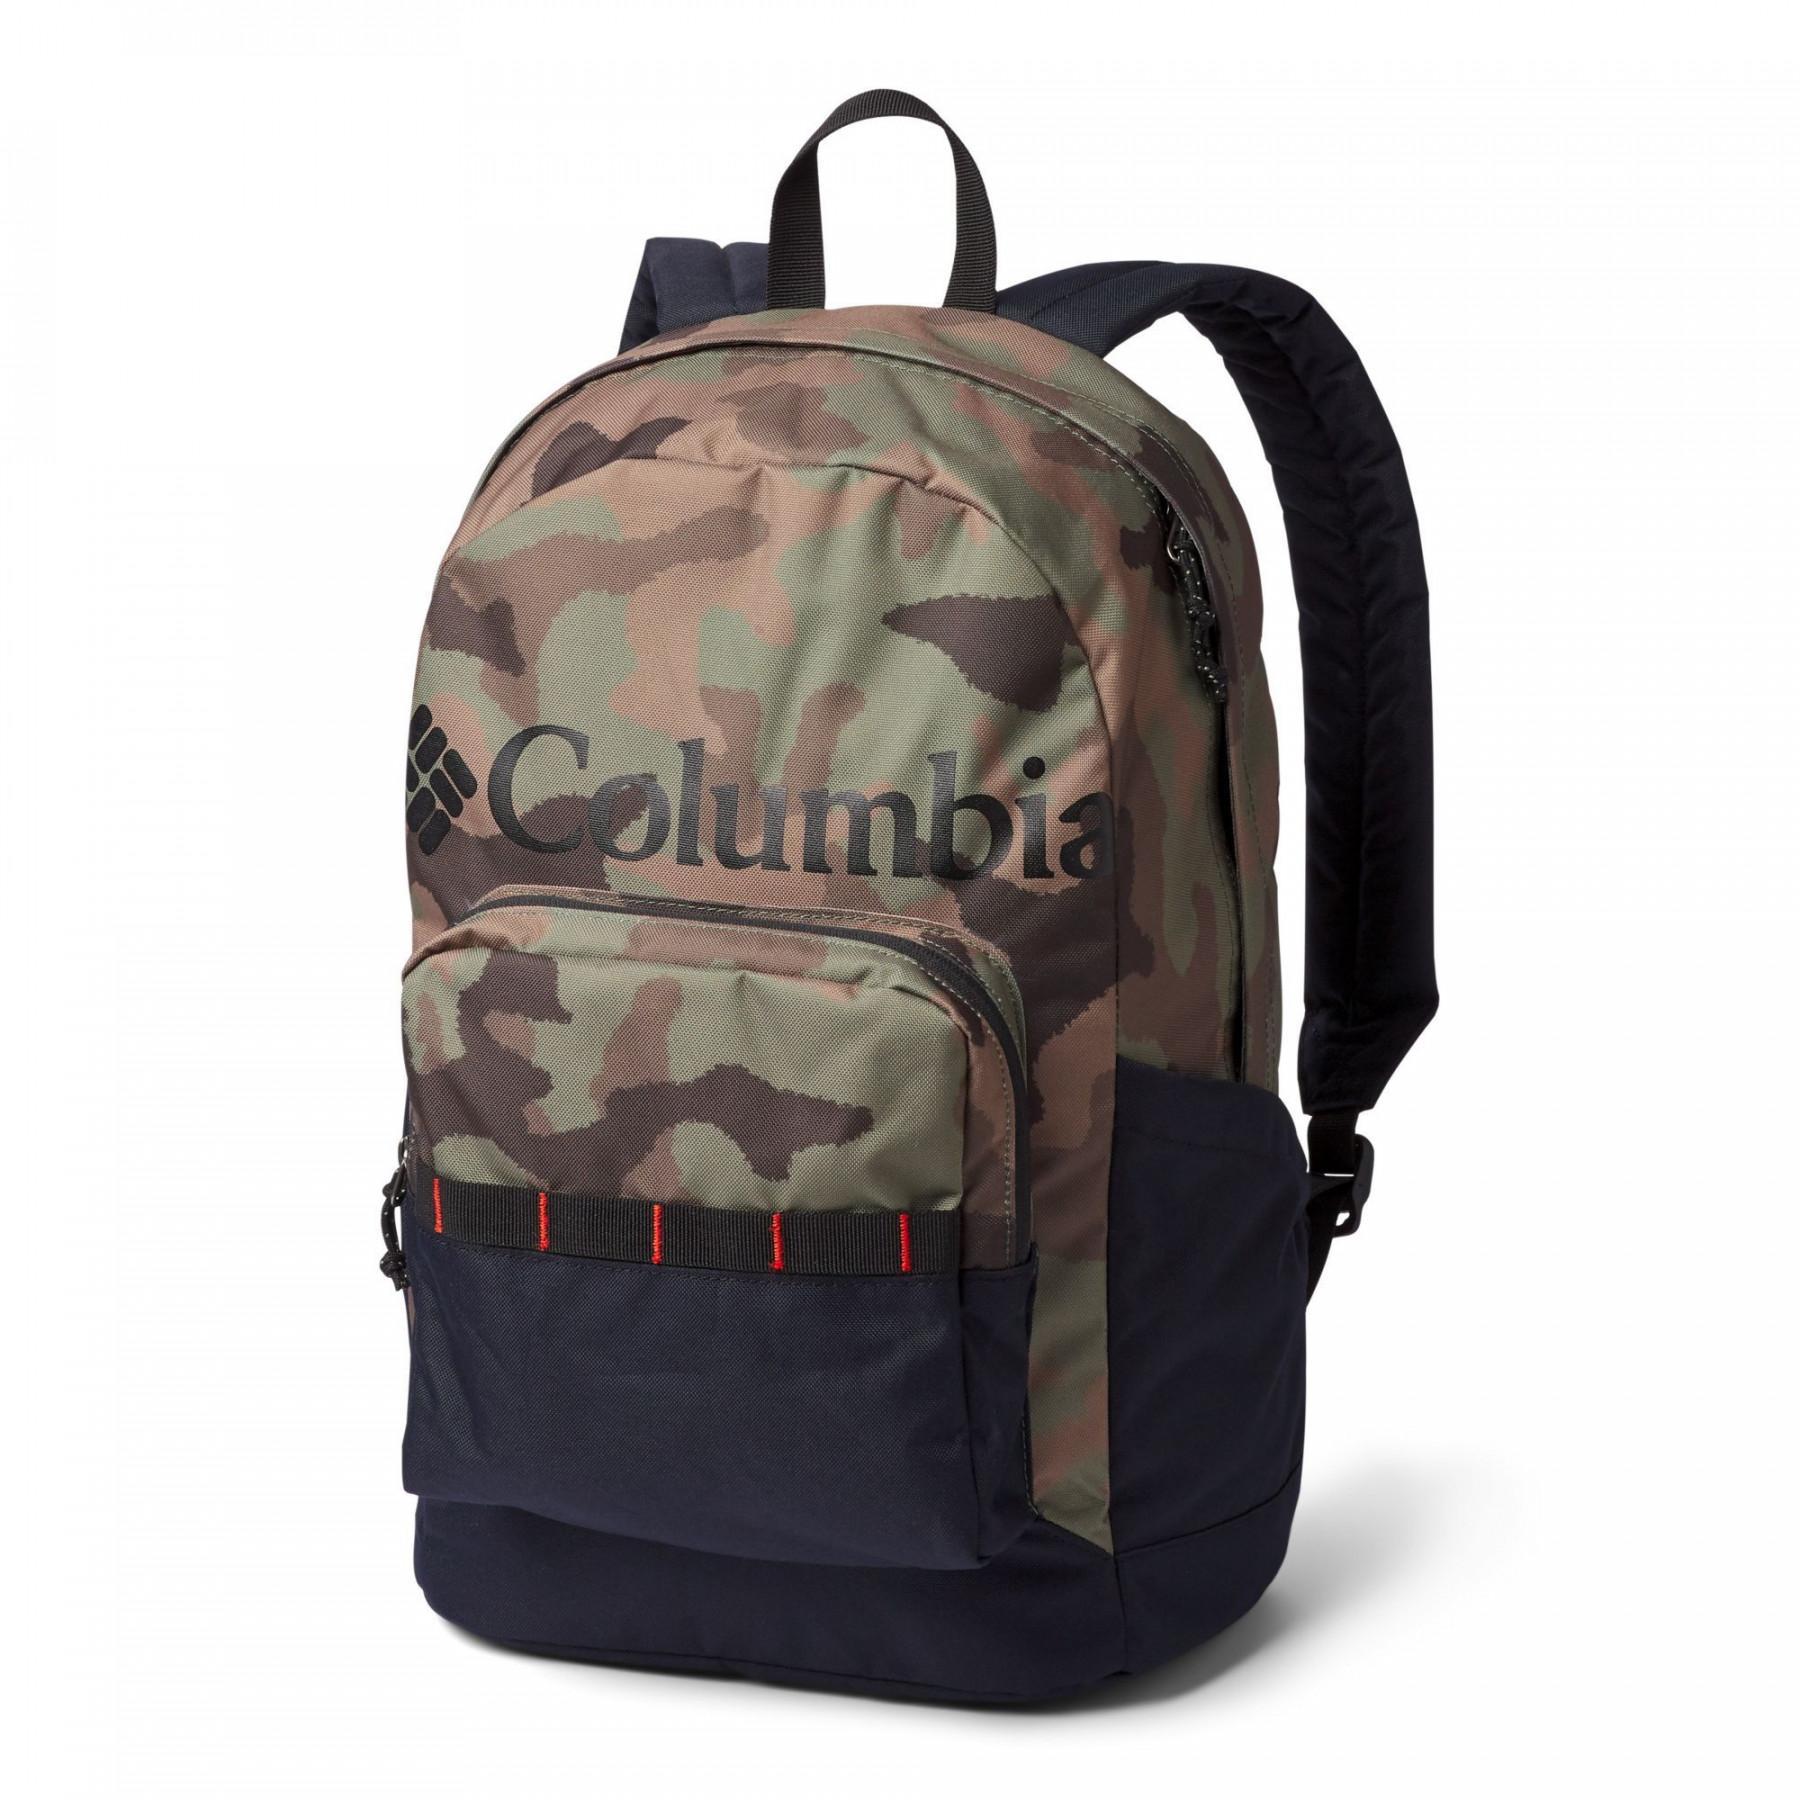 Backpack Columbia Zigzag 22L